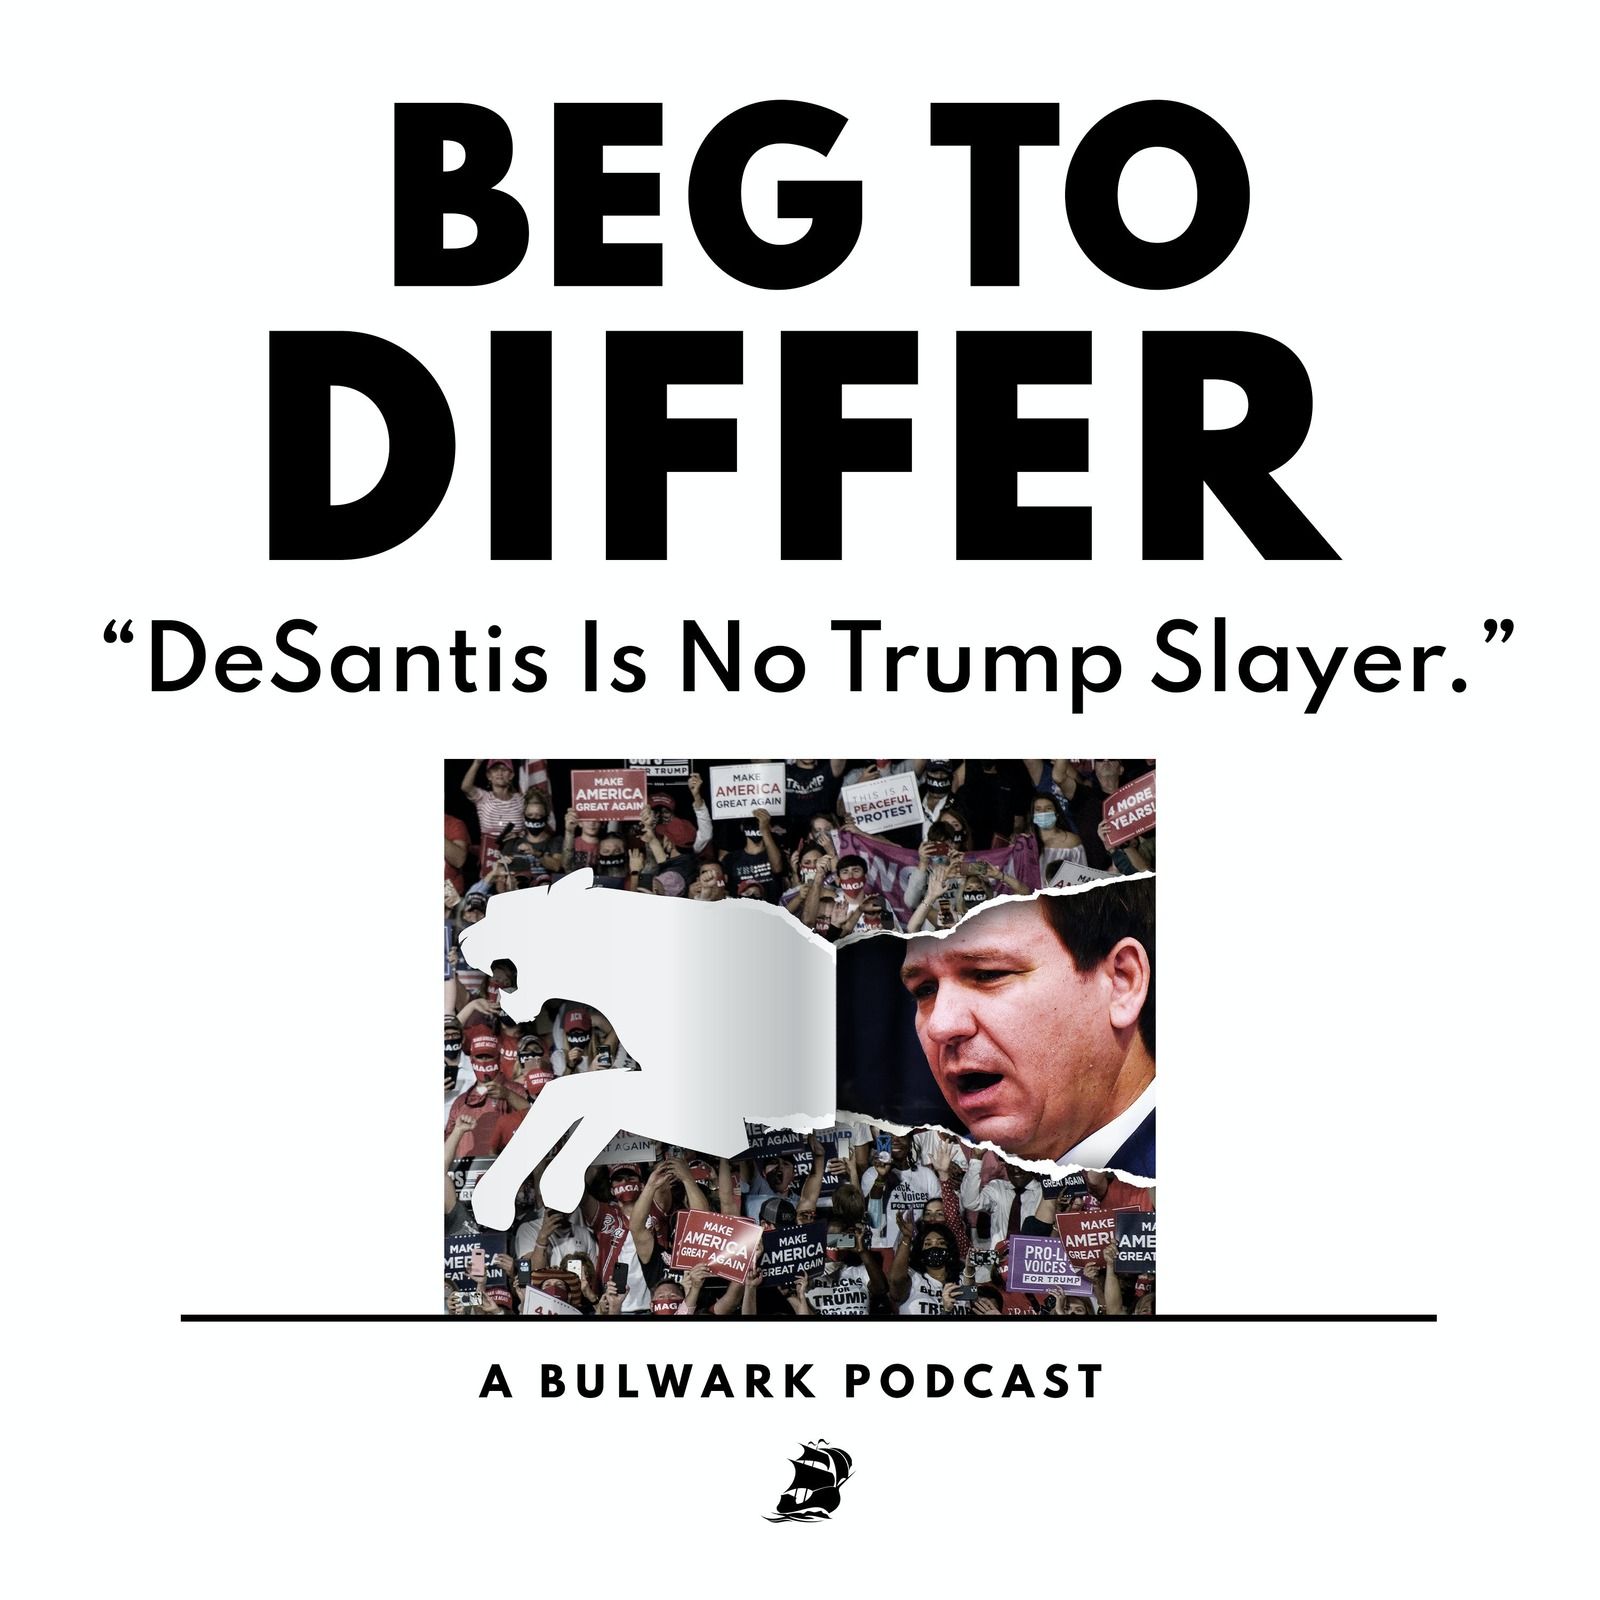 DeSantis Is No Trump Slayer